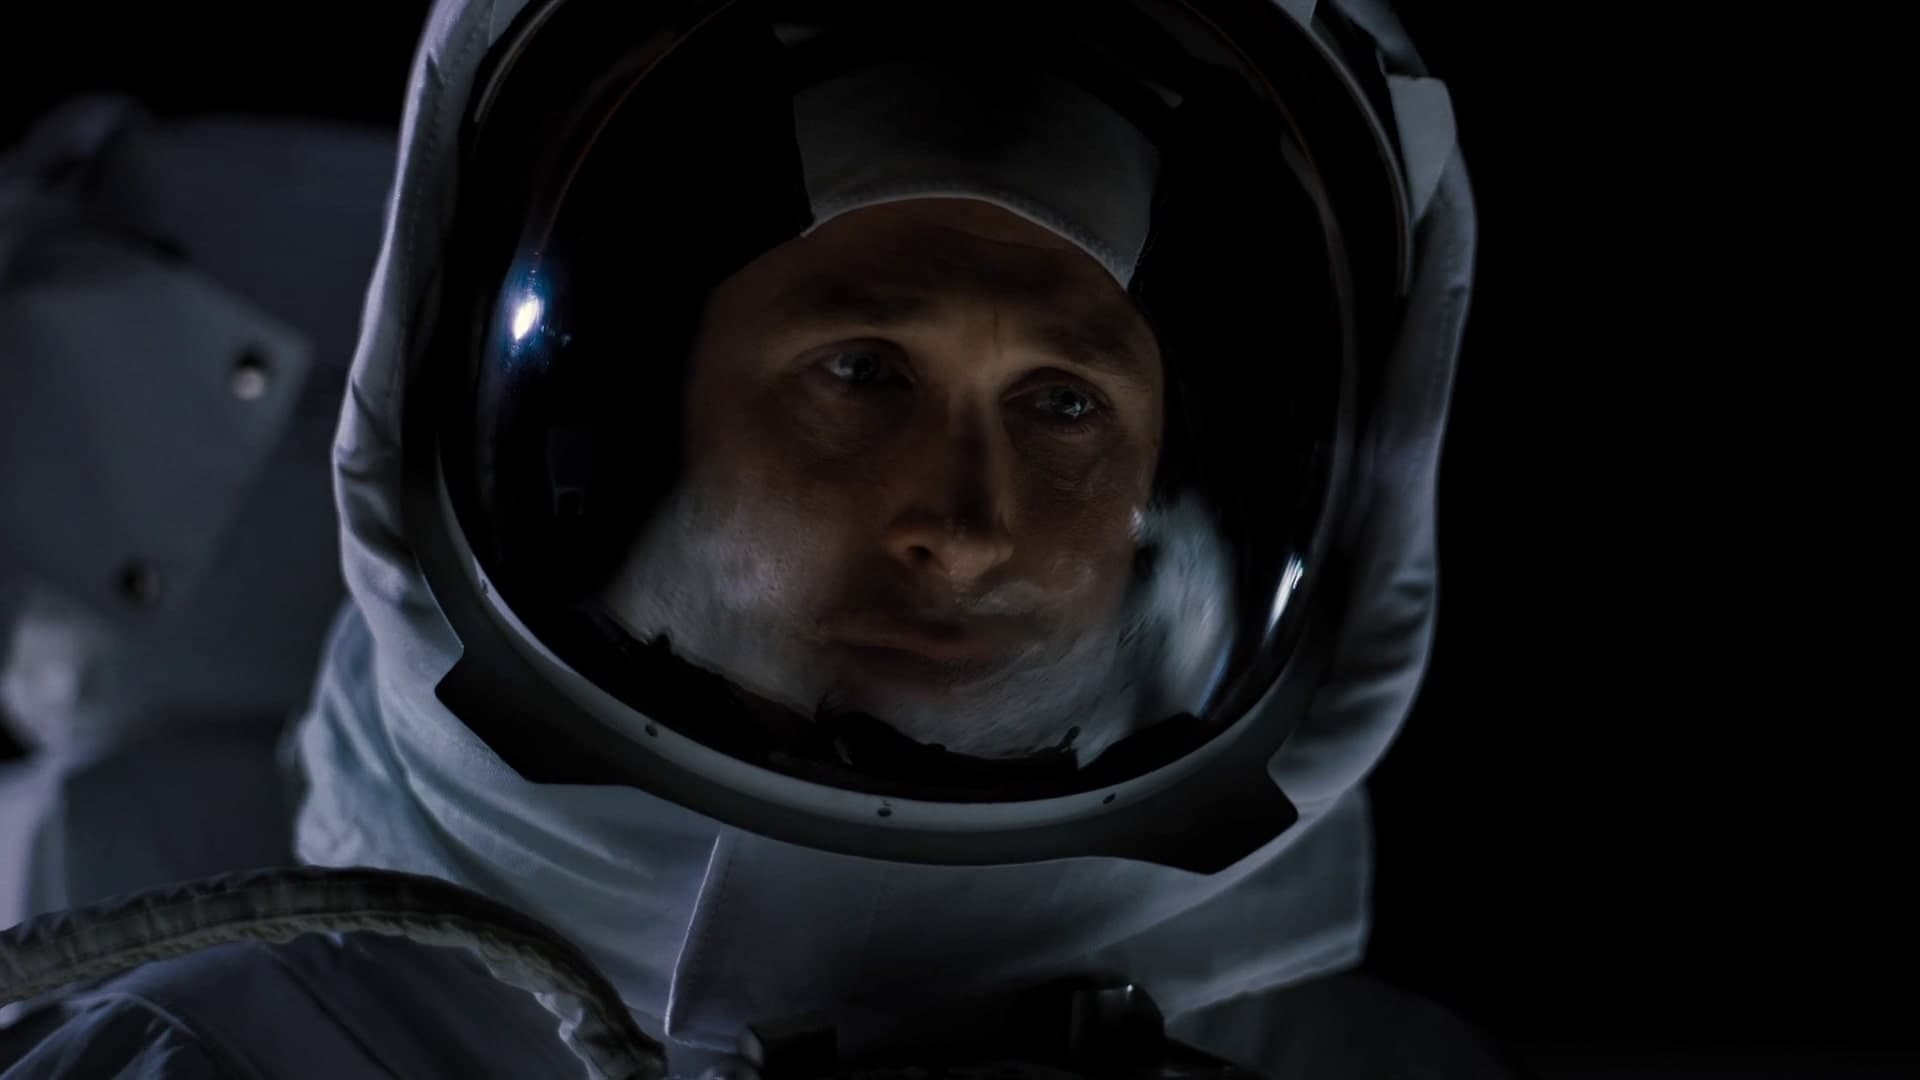 Image du film First Man : le premier homme sur la lune 4vn1ndn5x1lzjeosfbtb6saow6djpg